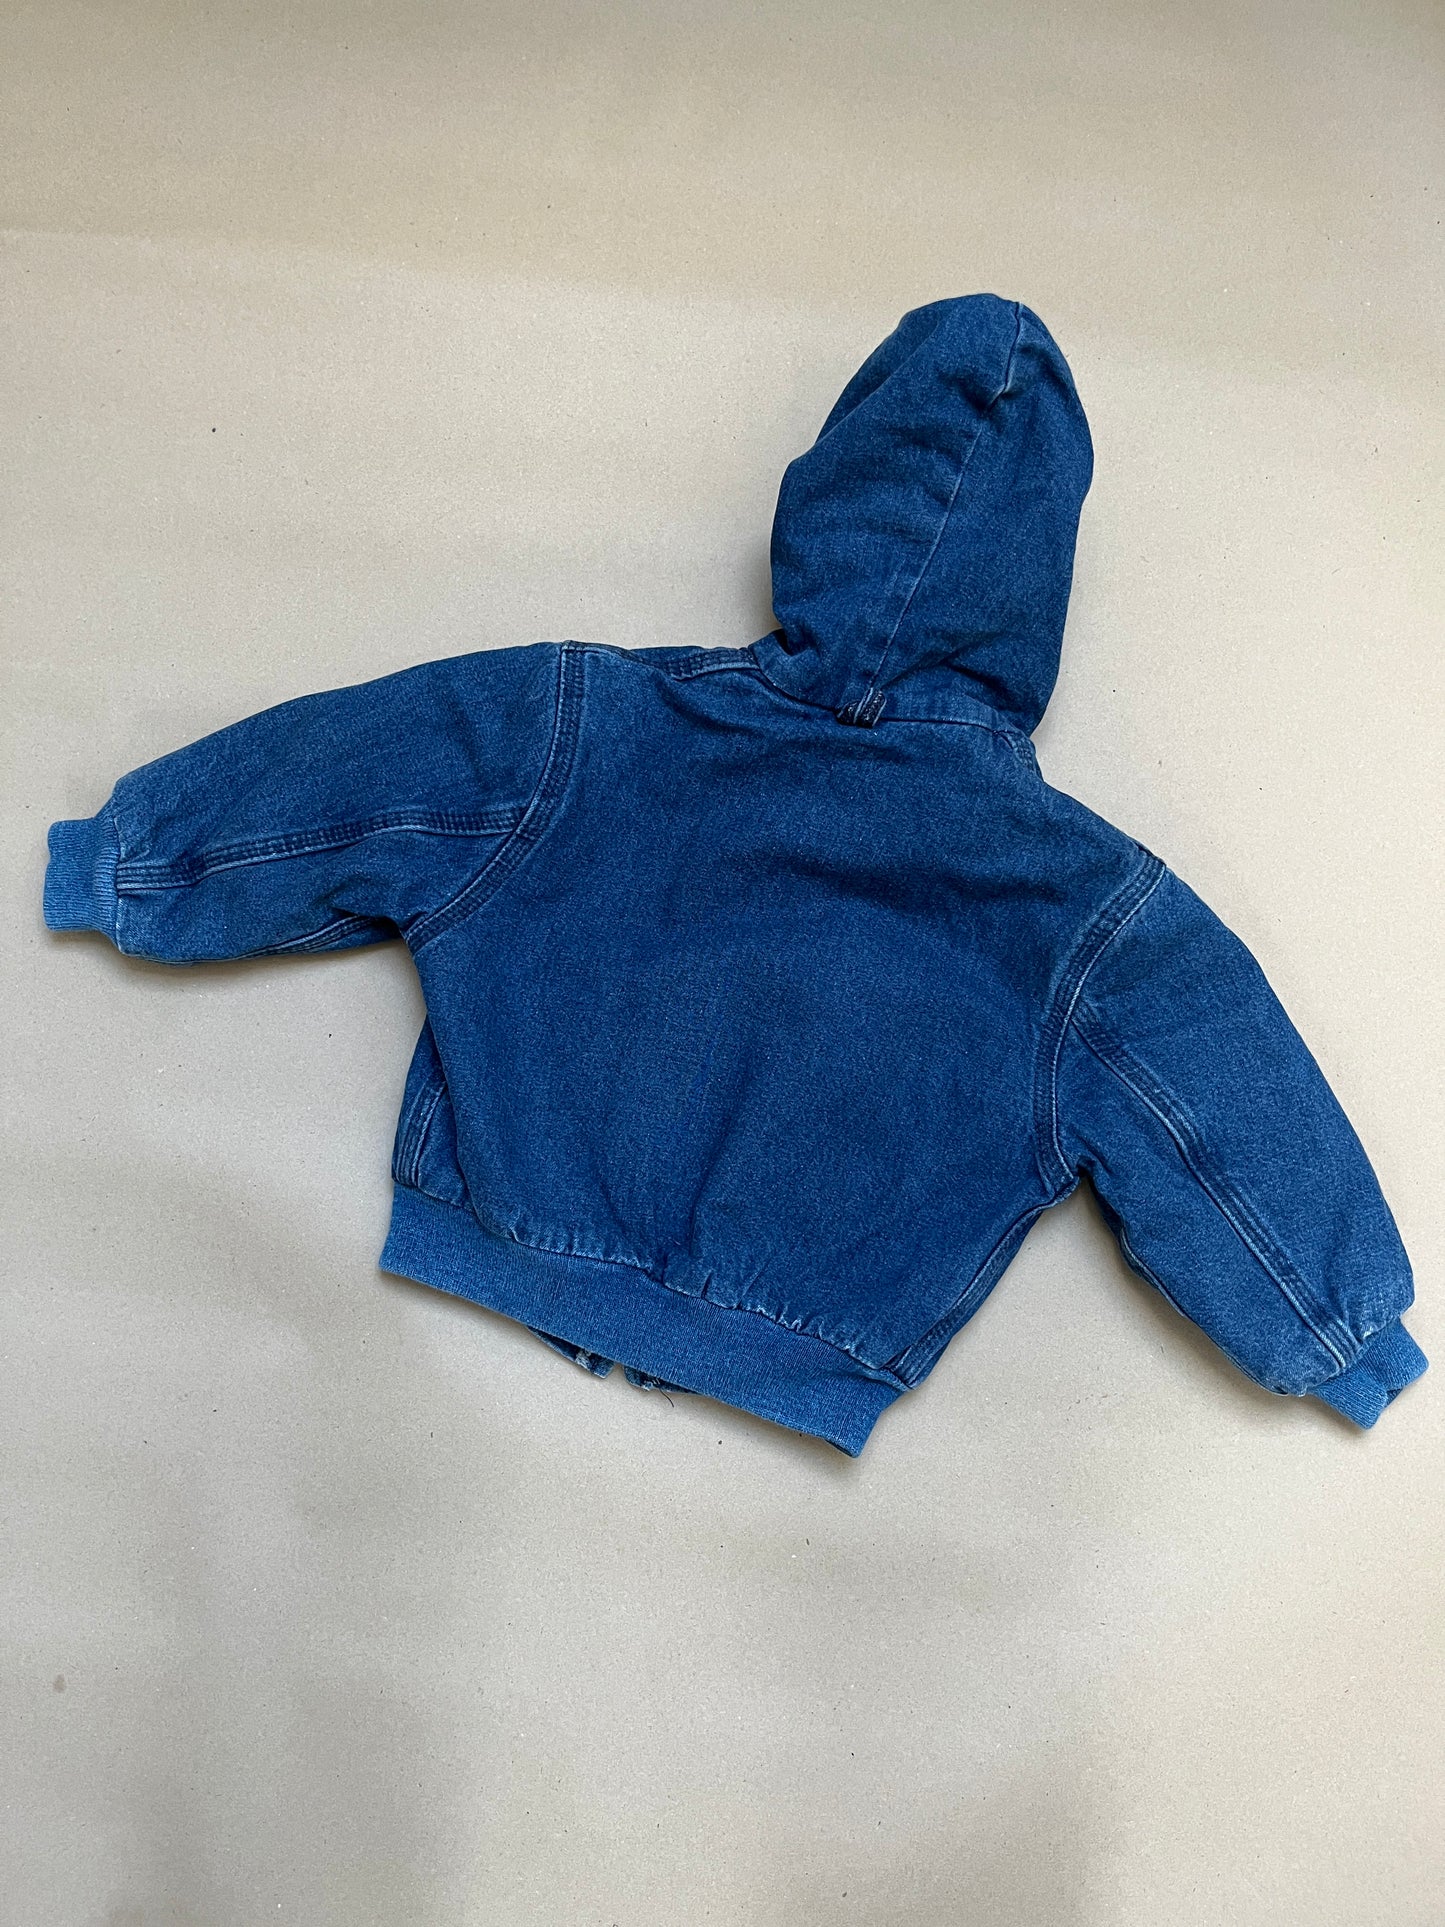 Hooded denim jacket, 92